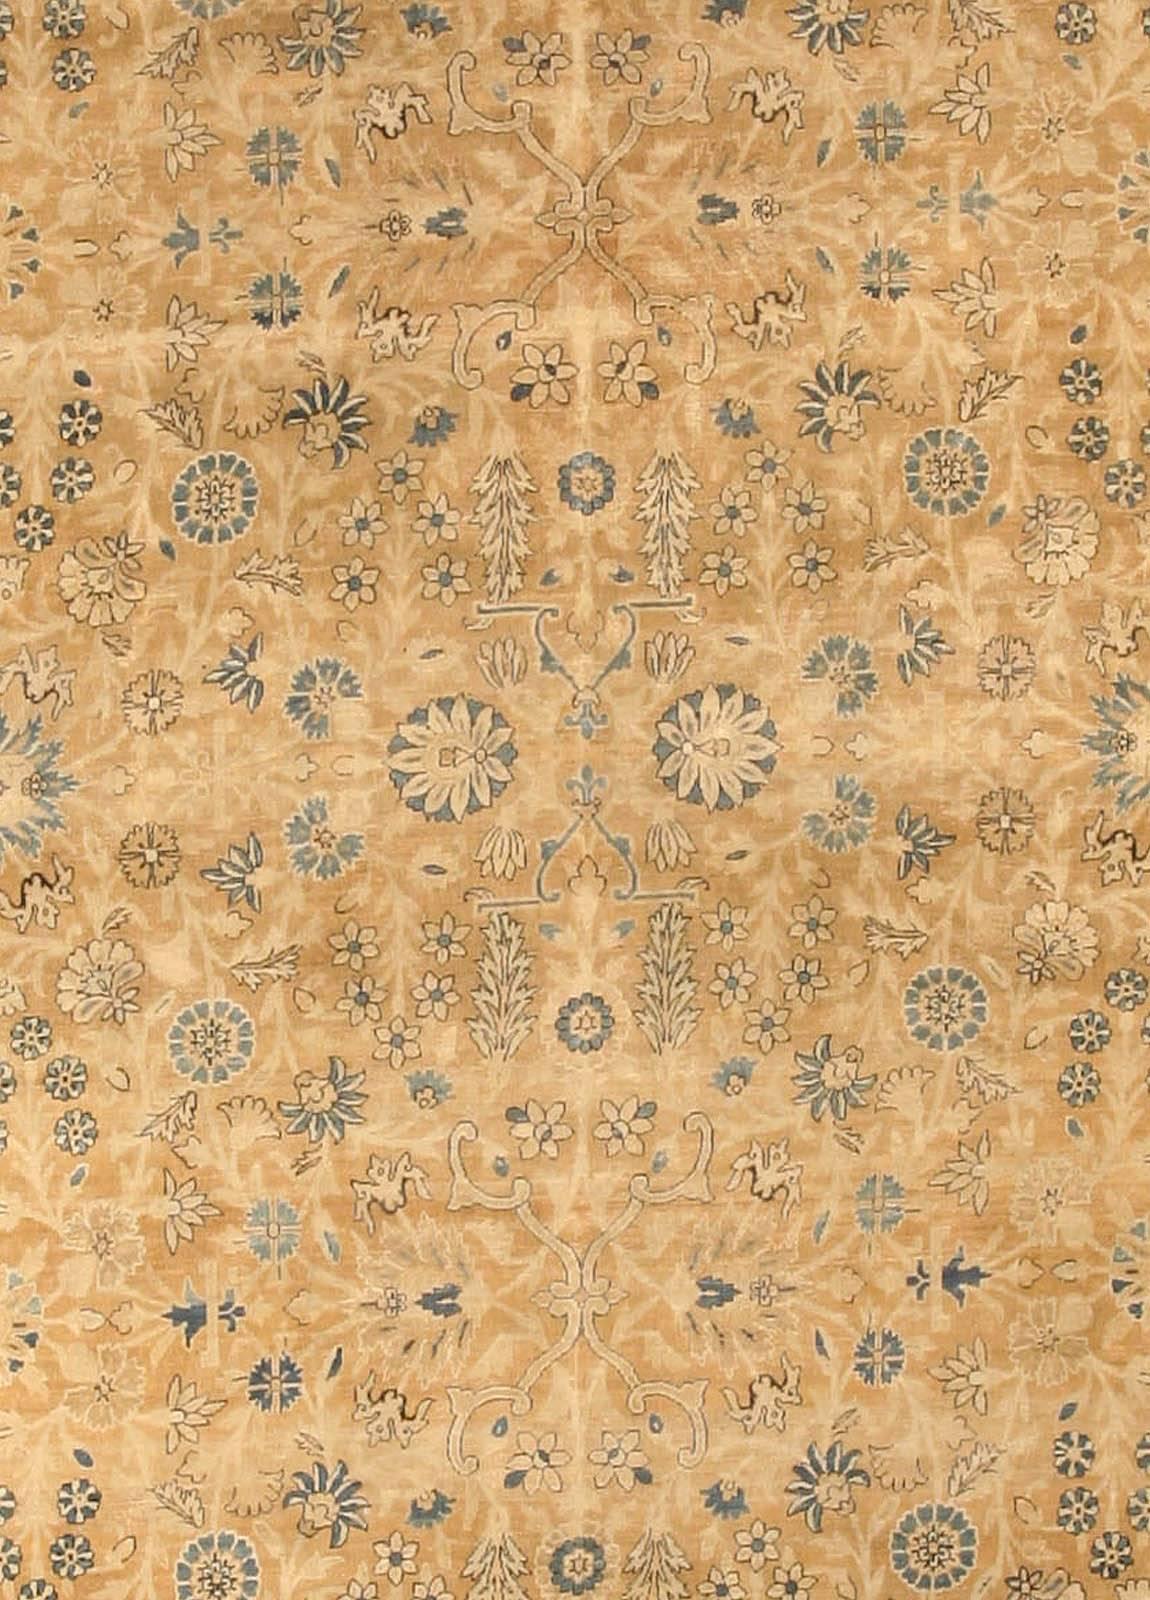 Oversized antique Persian Kirman handmade wool carpet
Size: 16'2